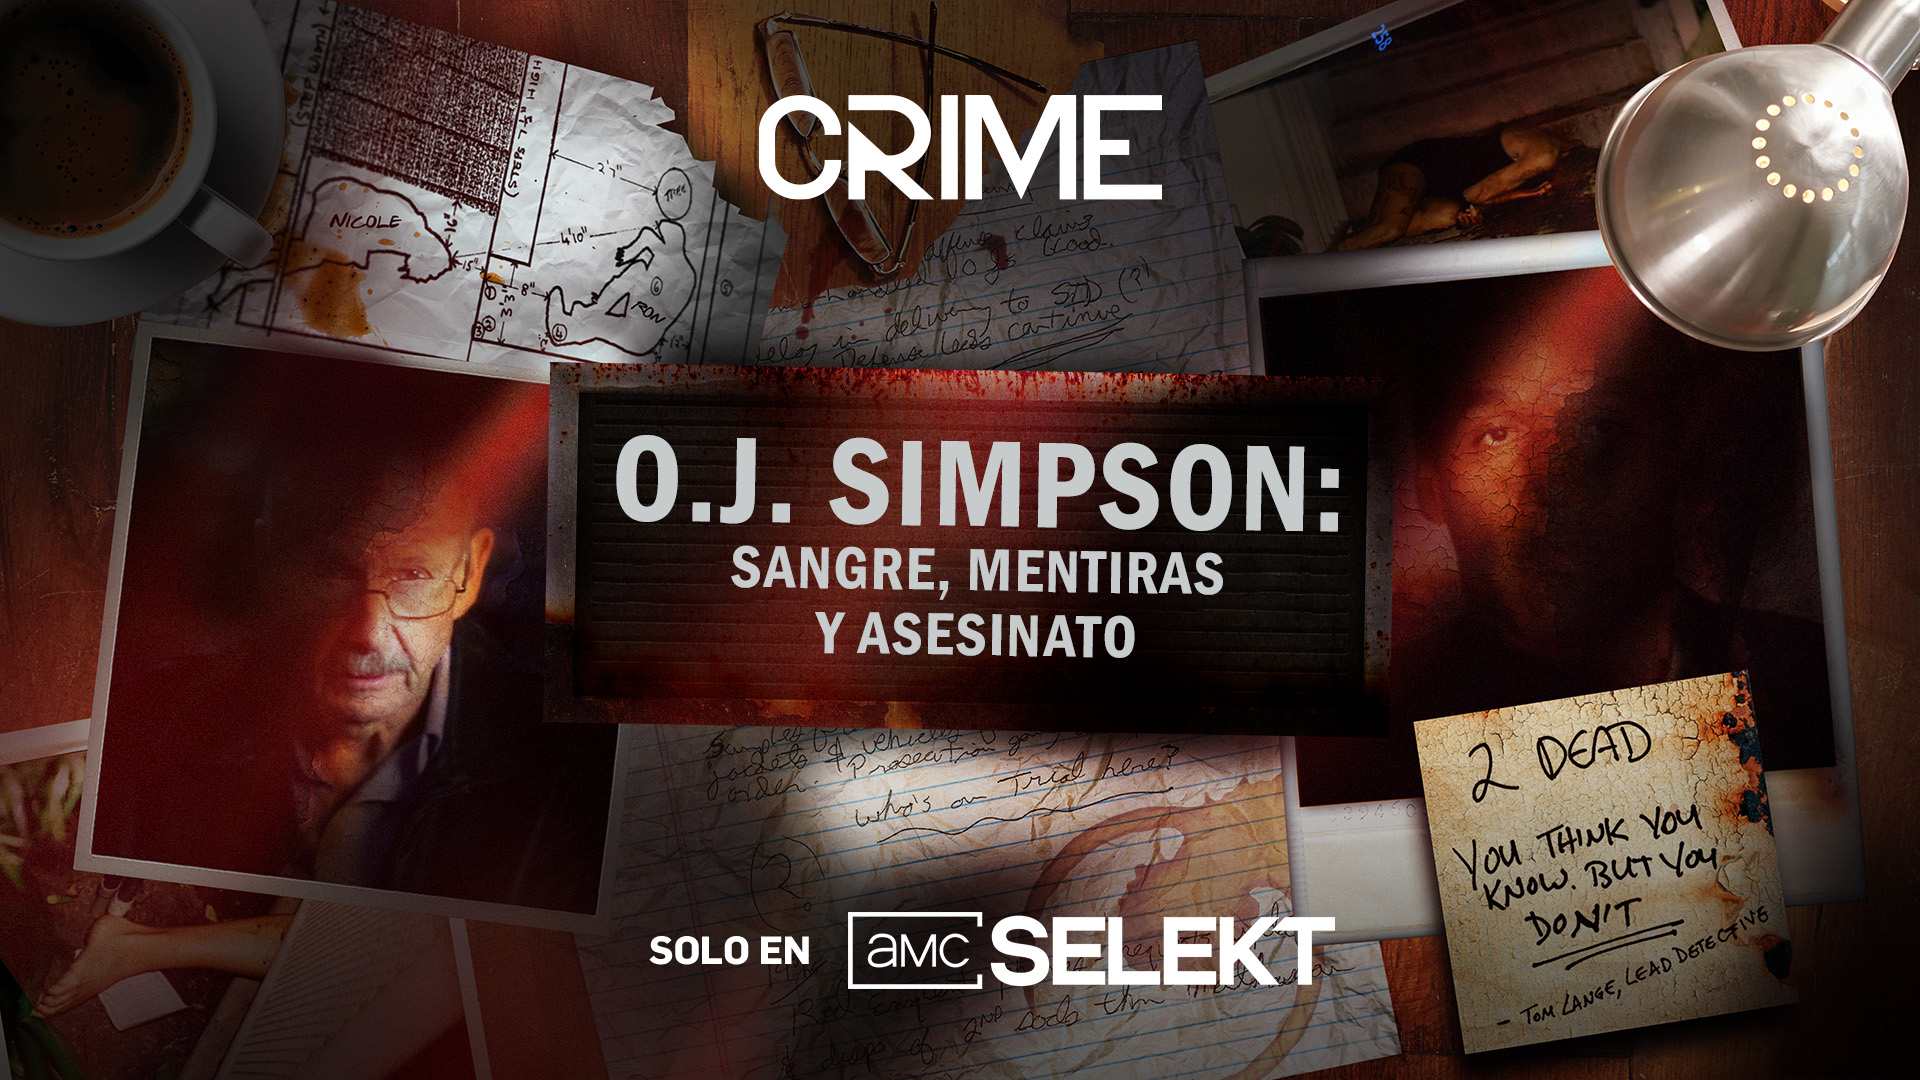 AMC CRIME emite la serie documental ‘O.J Simpson, sangre, mentiras y asesinato’